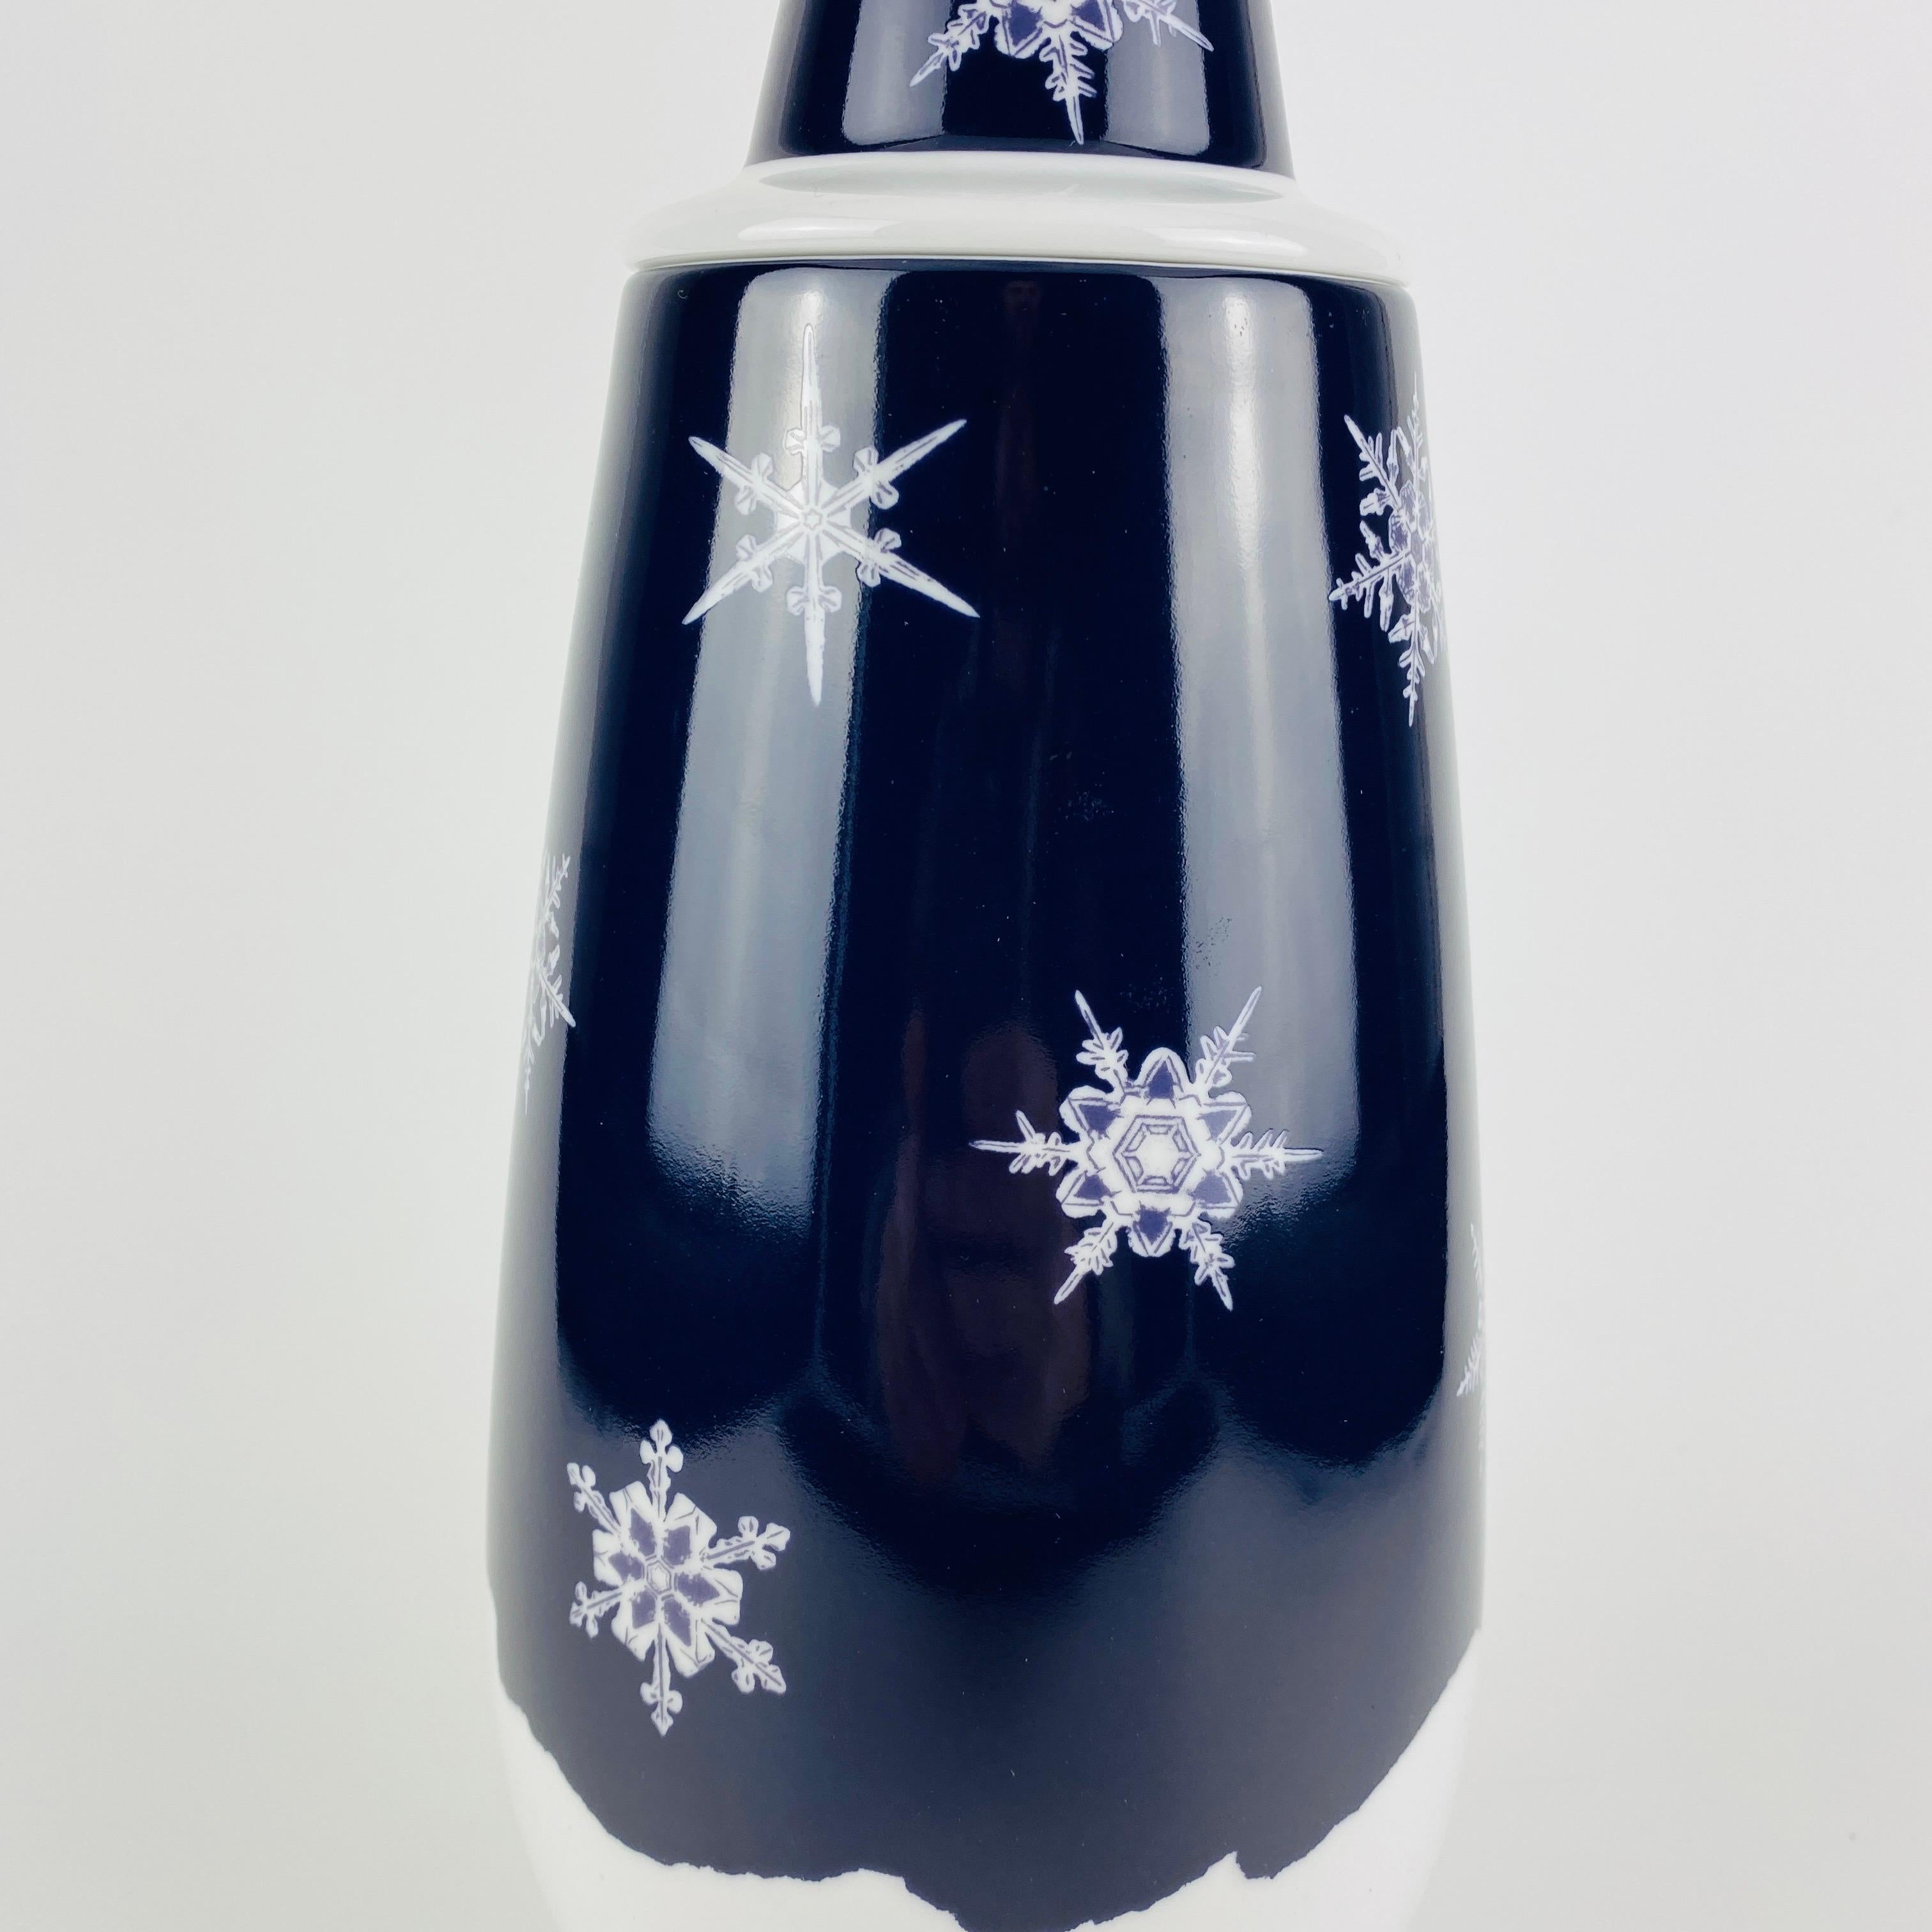 Porcelain Alessi Tendentse Vase by Jari Silvennoinen for A. Mendini 100% Make-Up Series 77